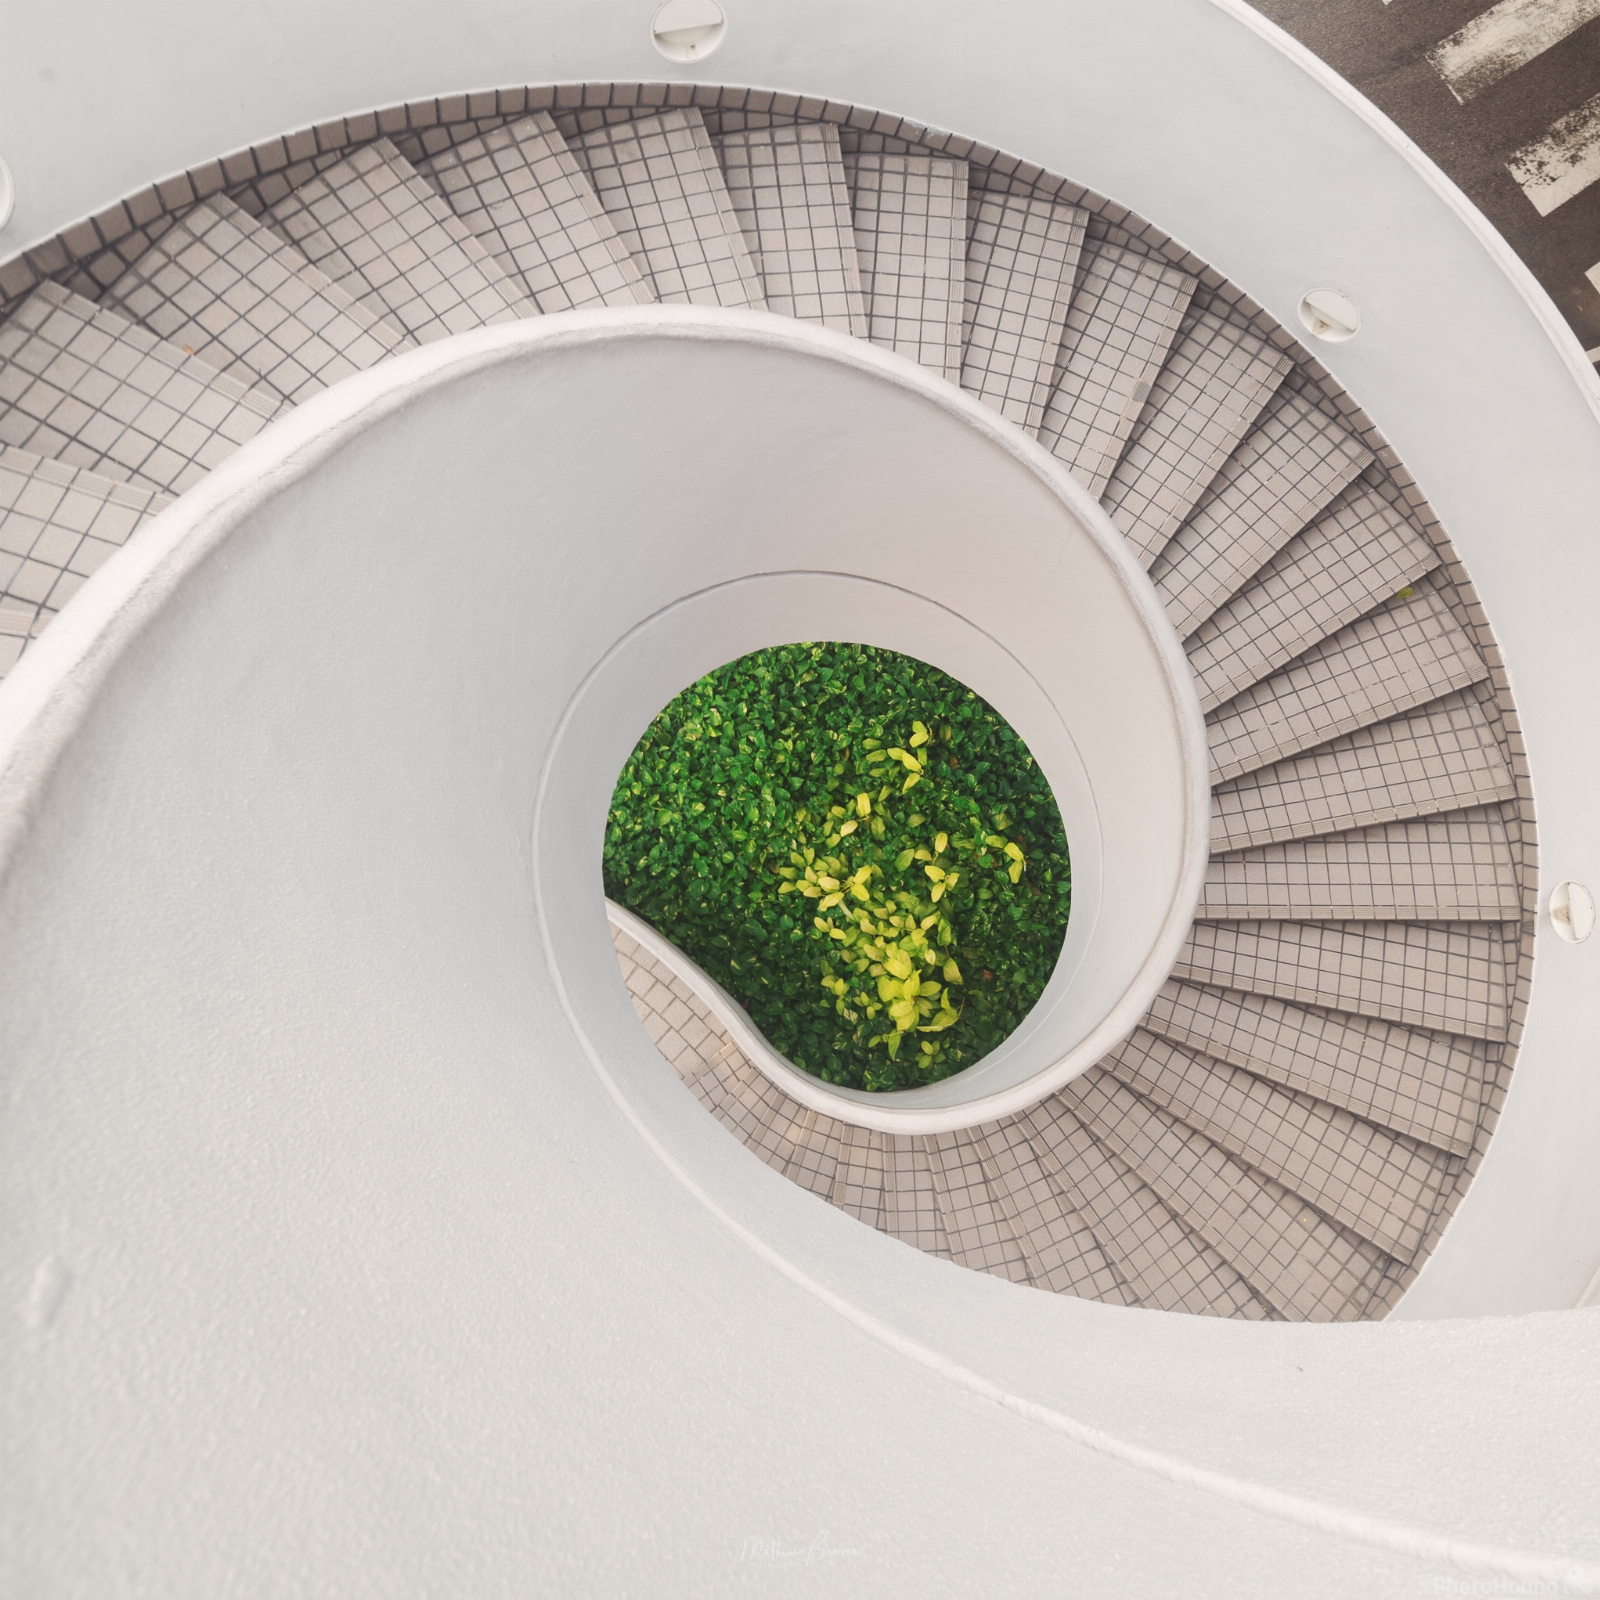 Image of Raffles Blvd Spiral Stairs by Mathew Browne